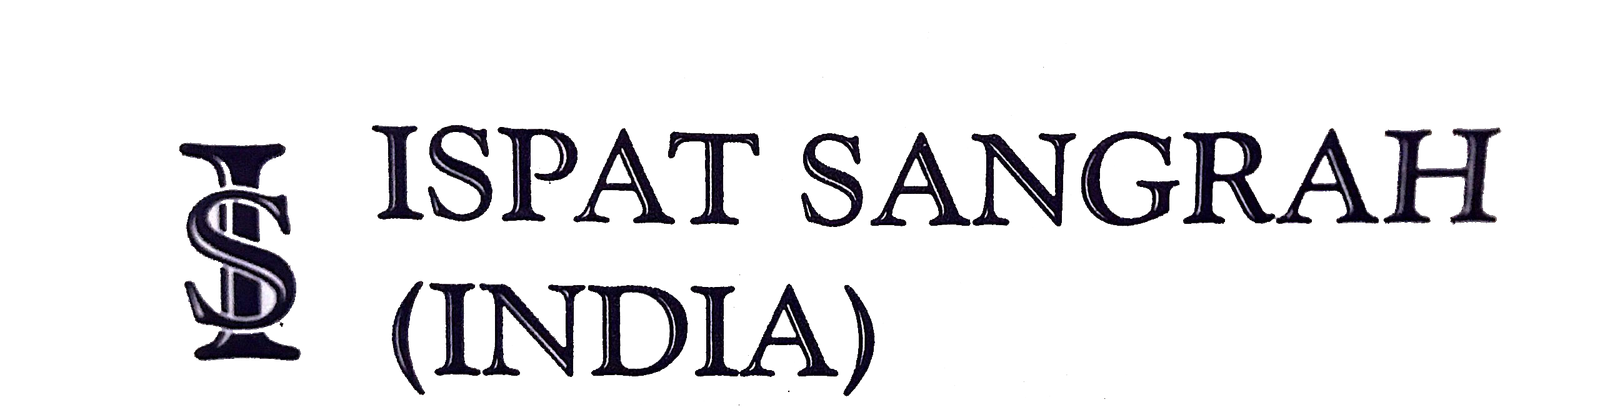 ISPAT Online Logo